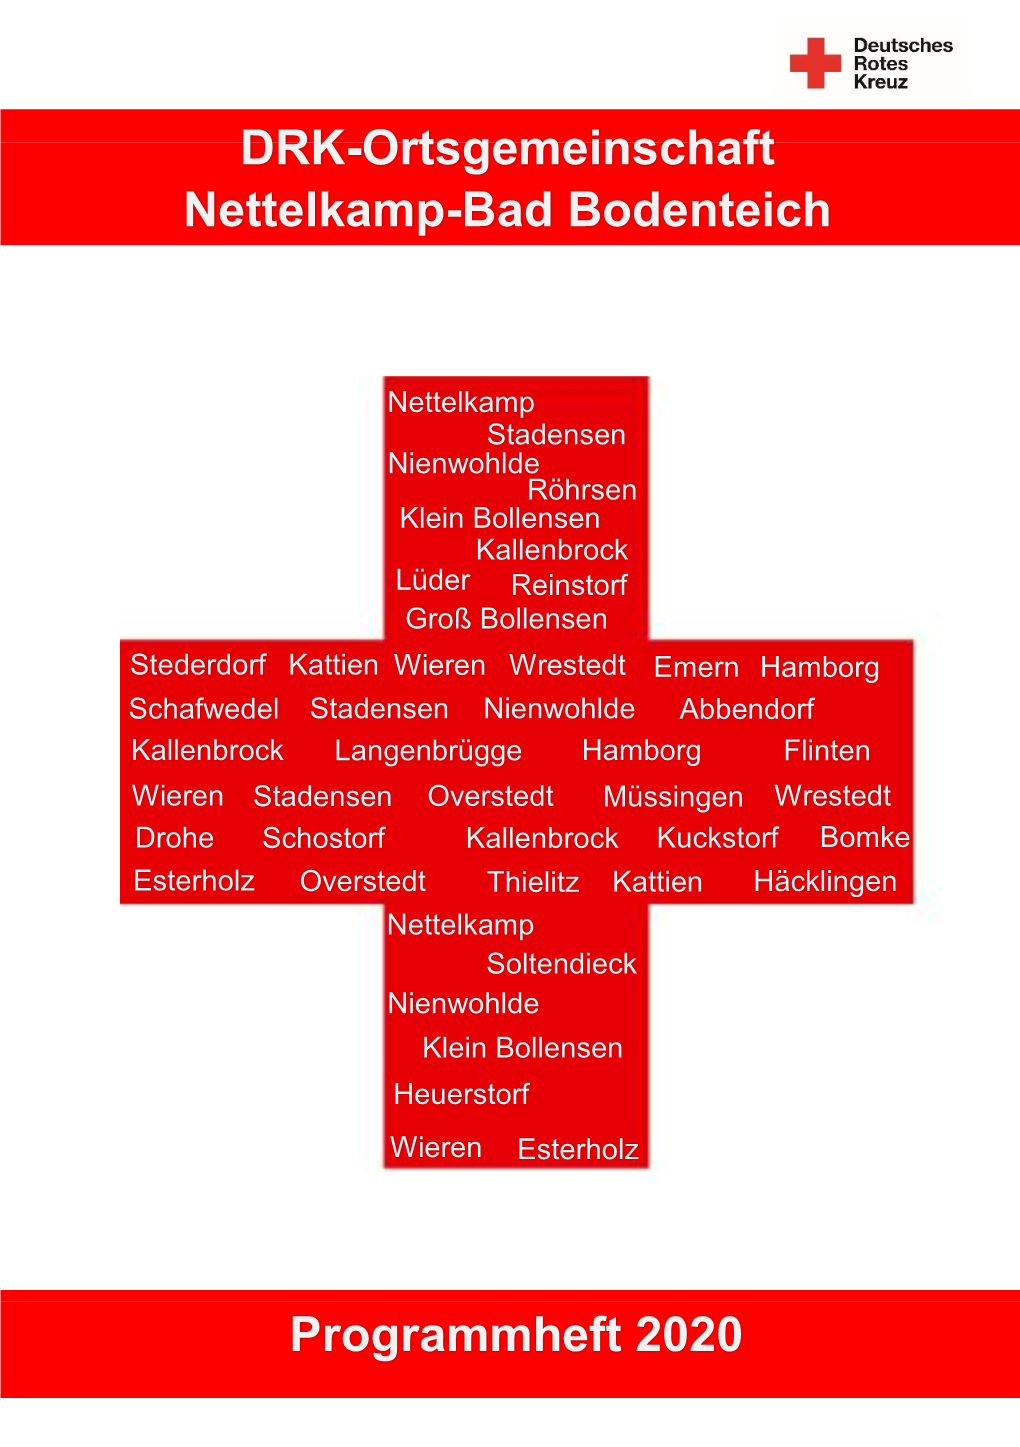 DRK-Ortsgemeinschaft Nettelkamp-Bad Bodenteich